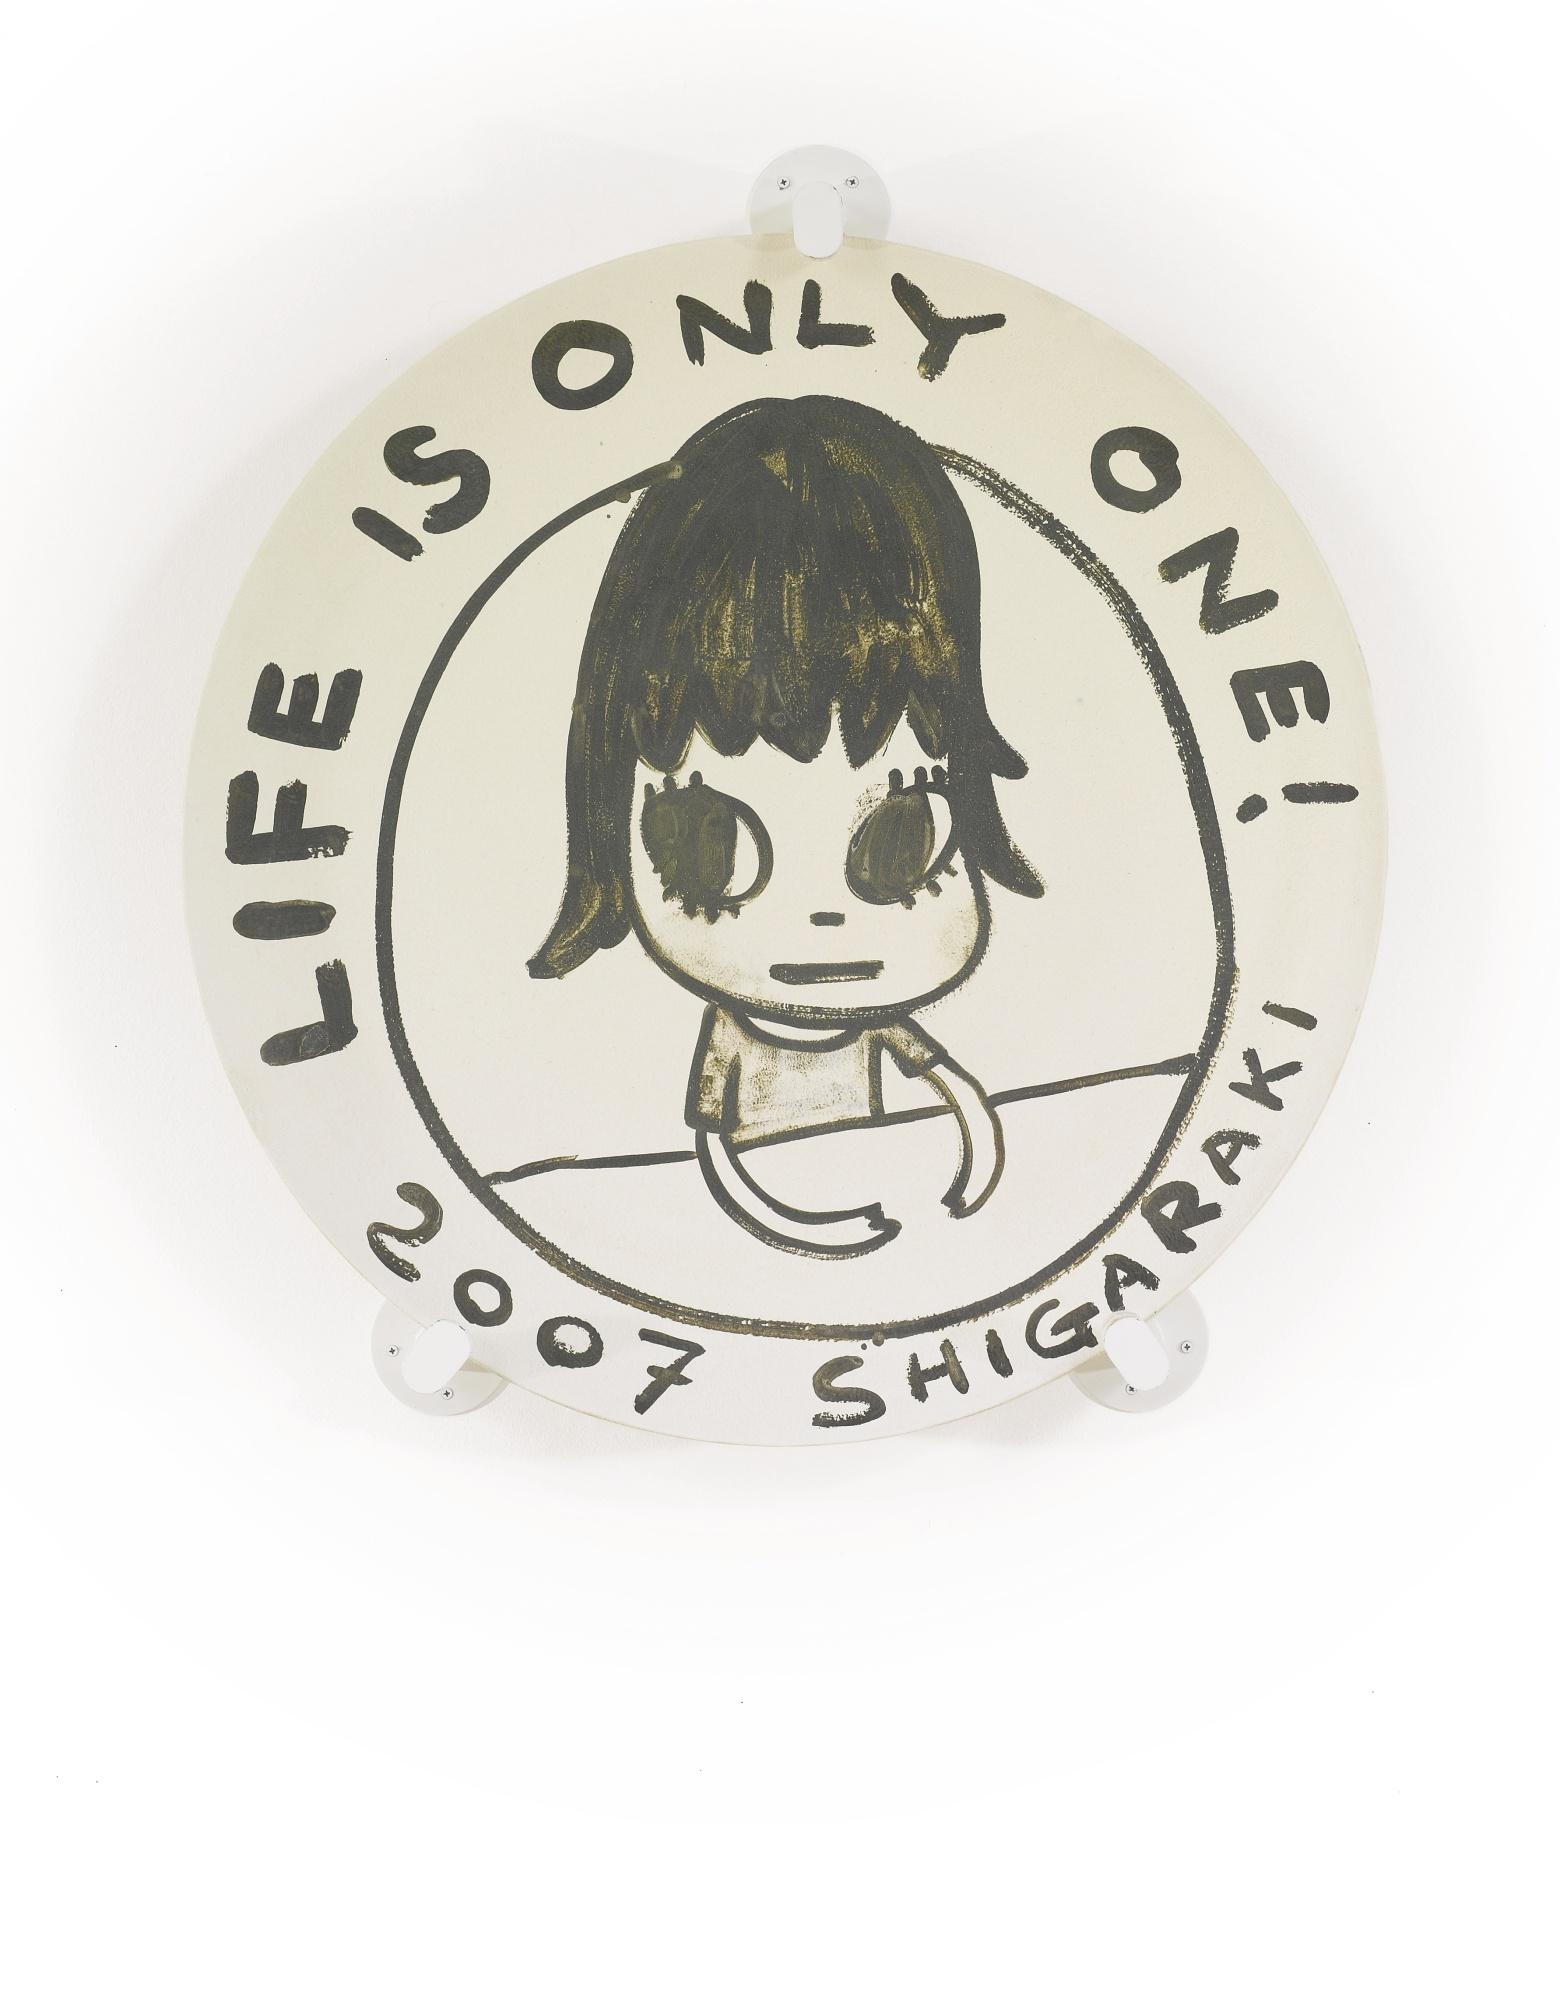 Life is Only One Yoshitomo Nara Art Painting Brooch Metal Badge